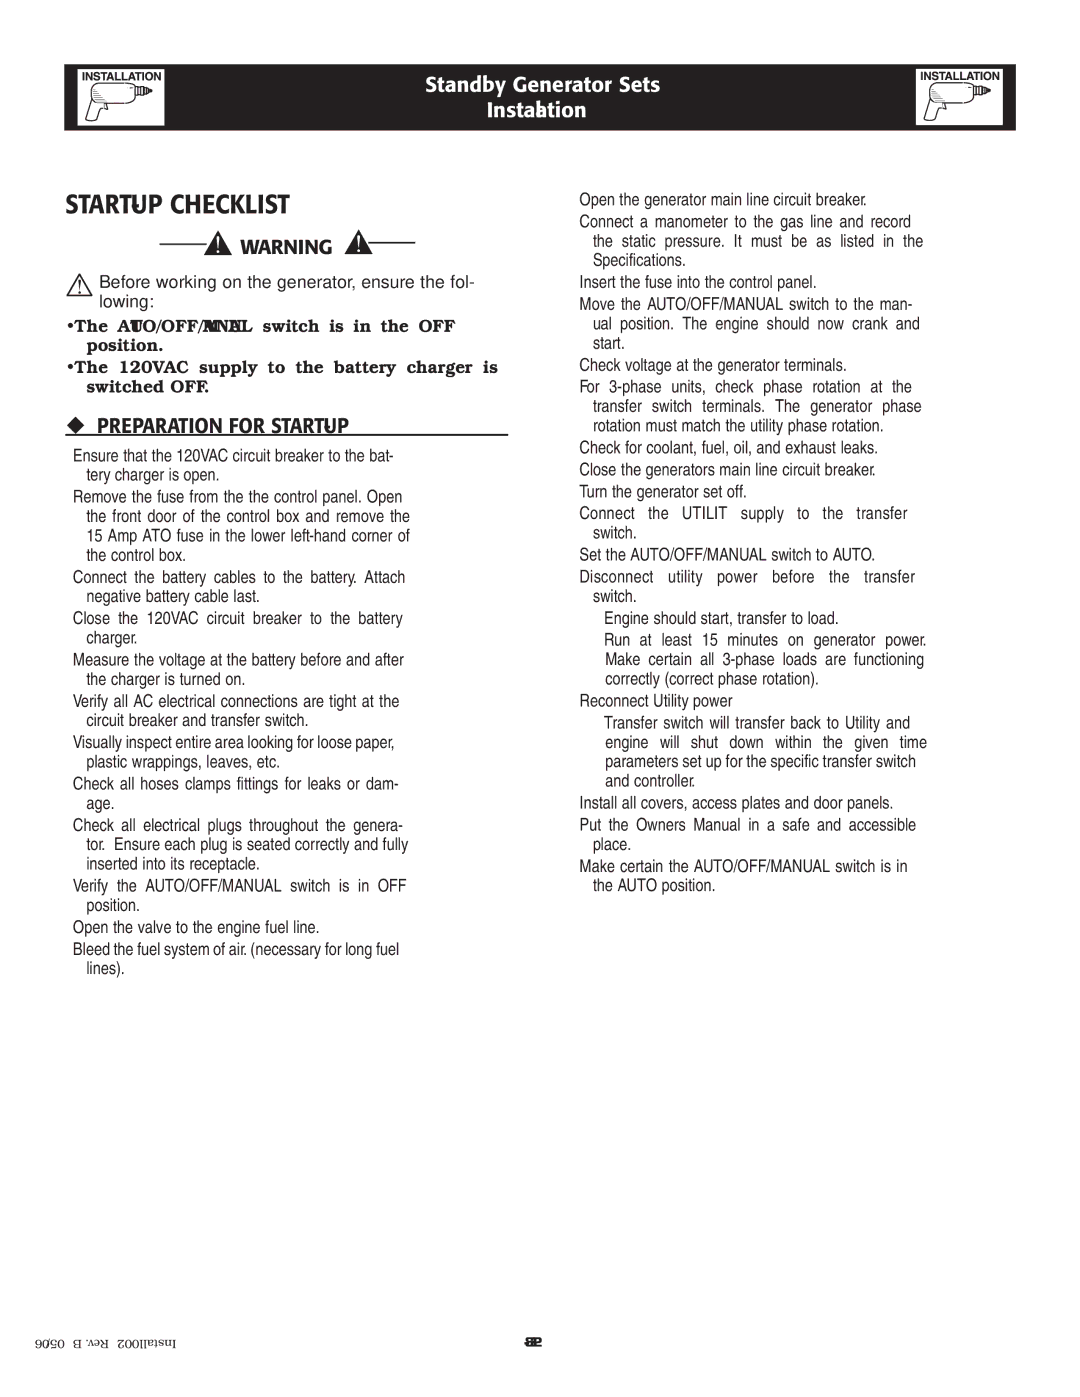 Siemens SG035 owner manual START-UP Checklist, ‹ Preparation for START-UP 